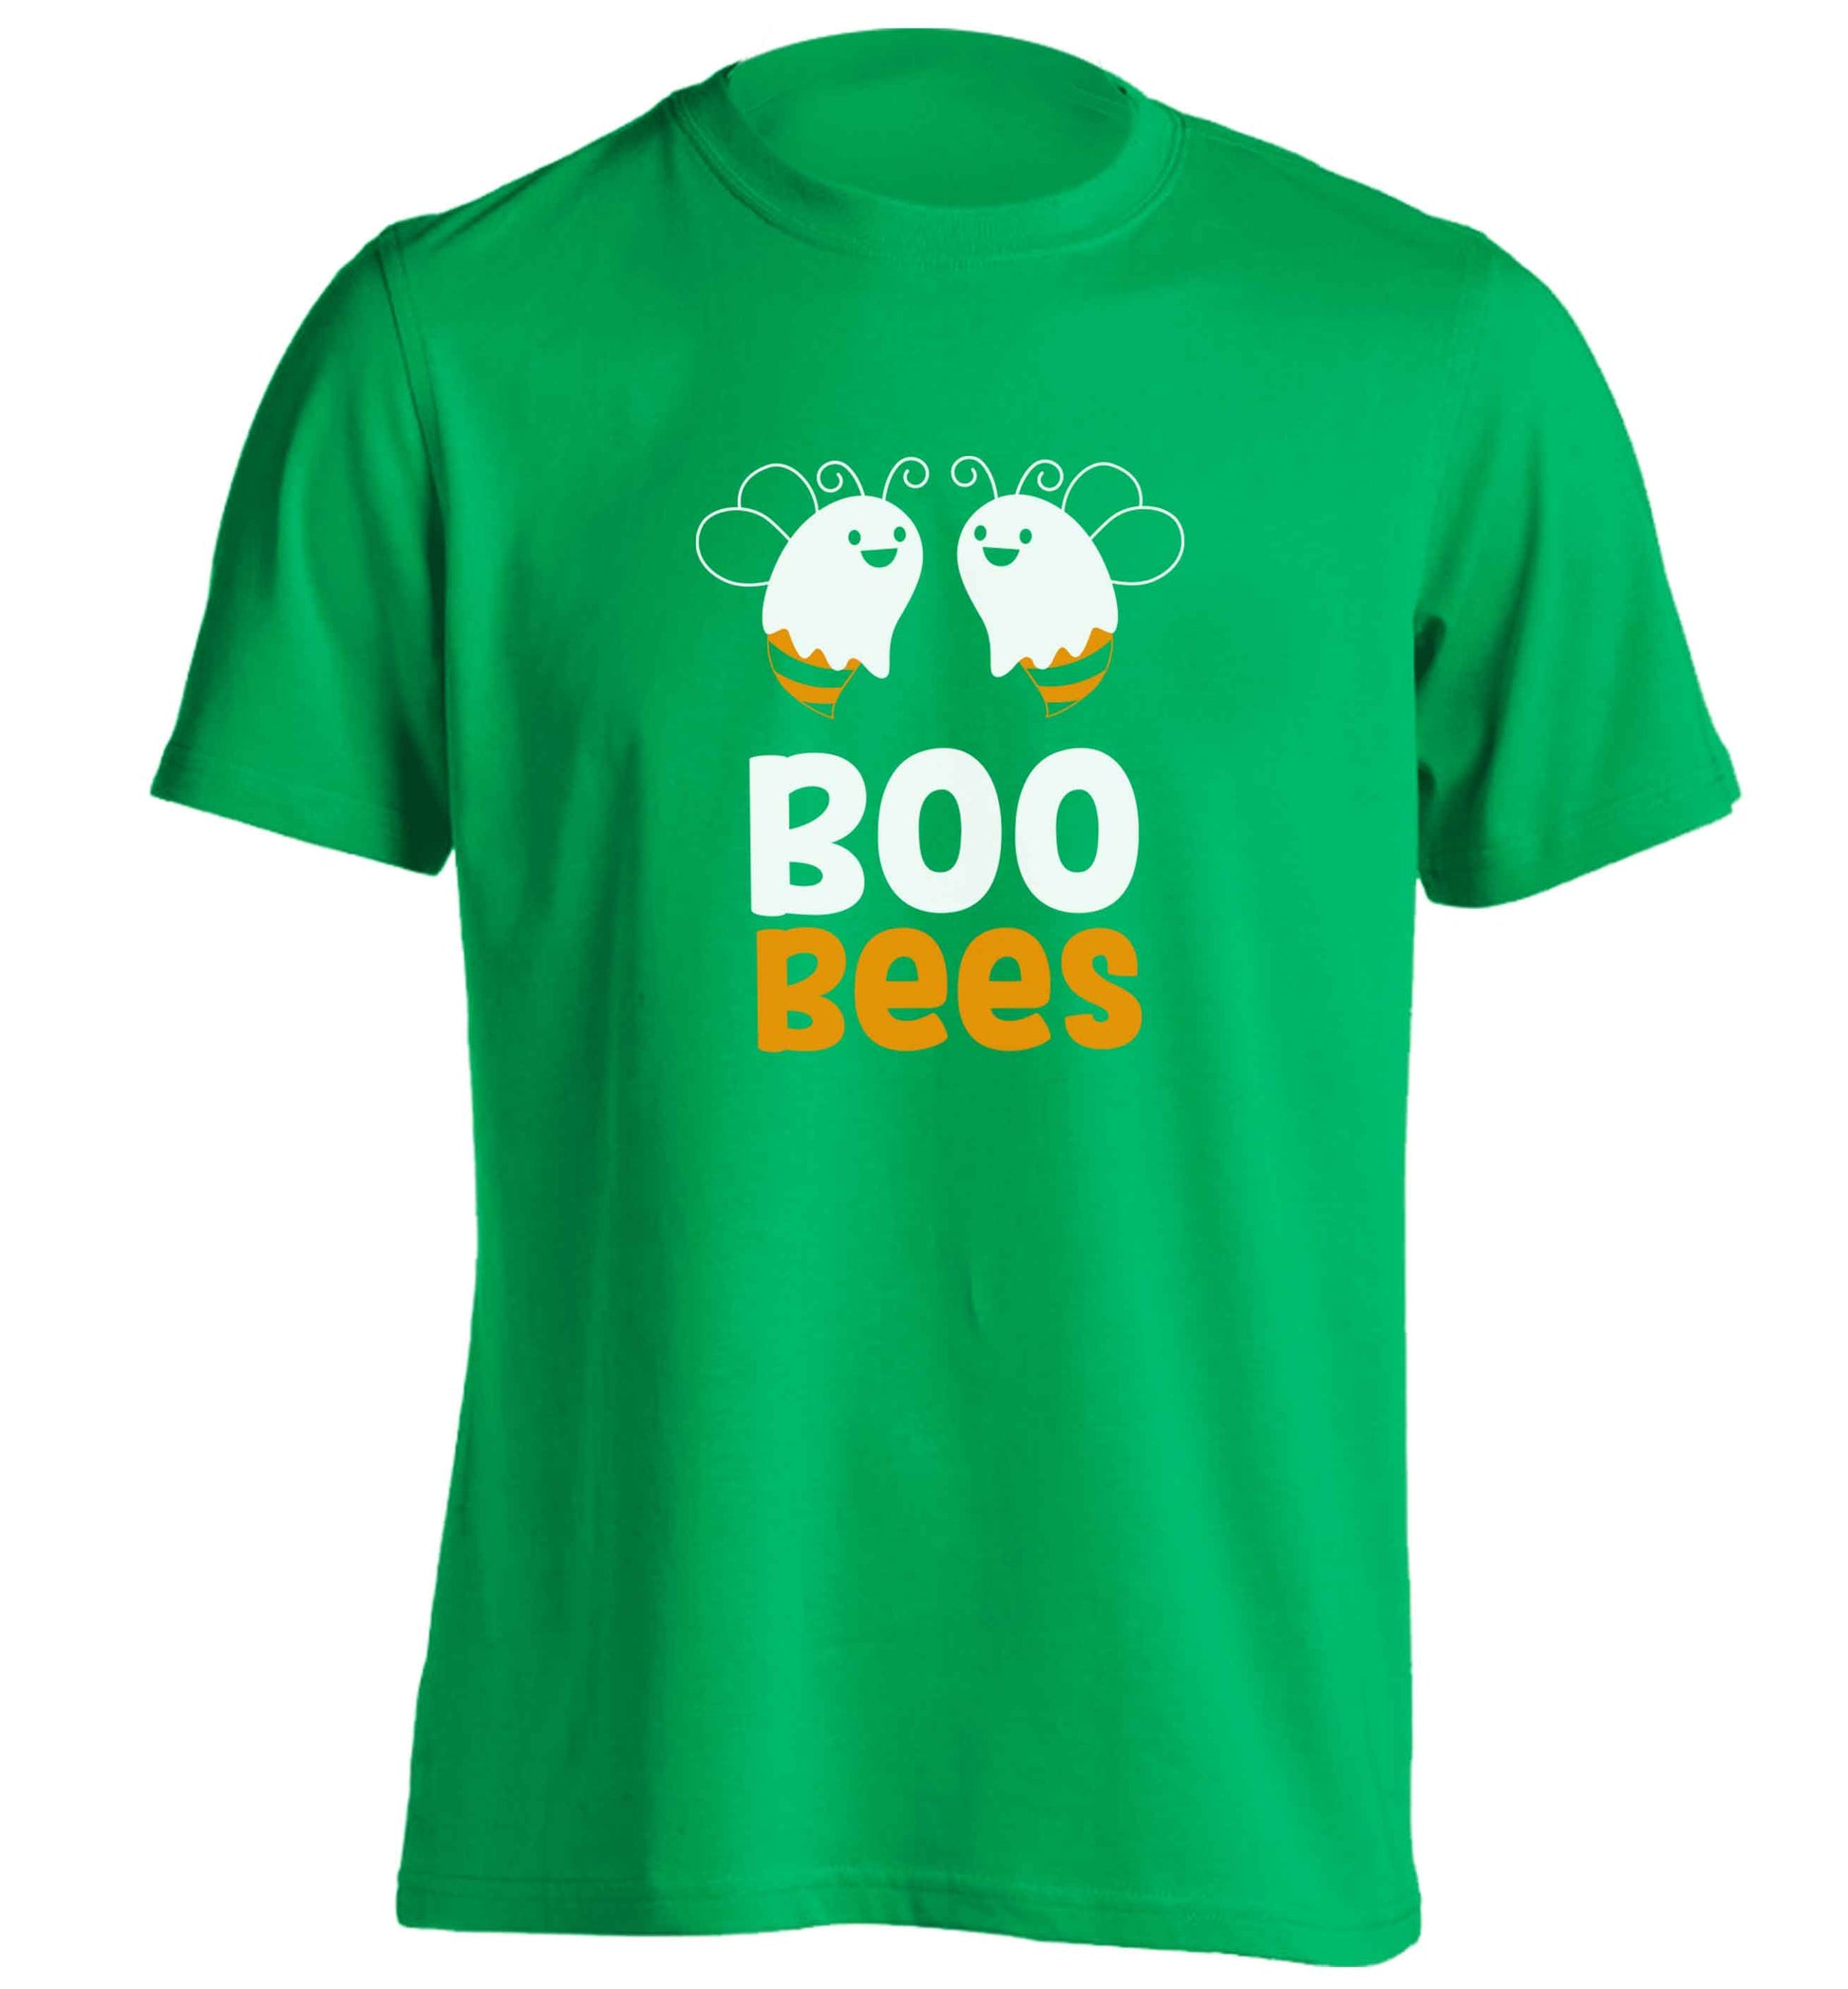 Boo bees Kit adults unisex green Tshirt 2XL